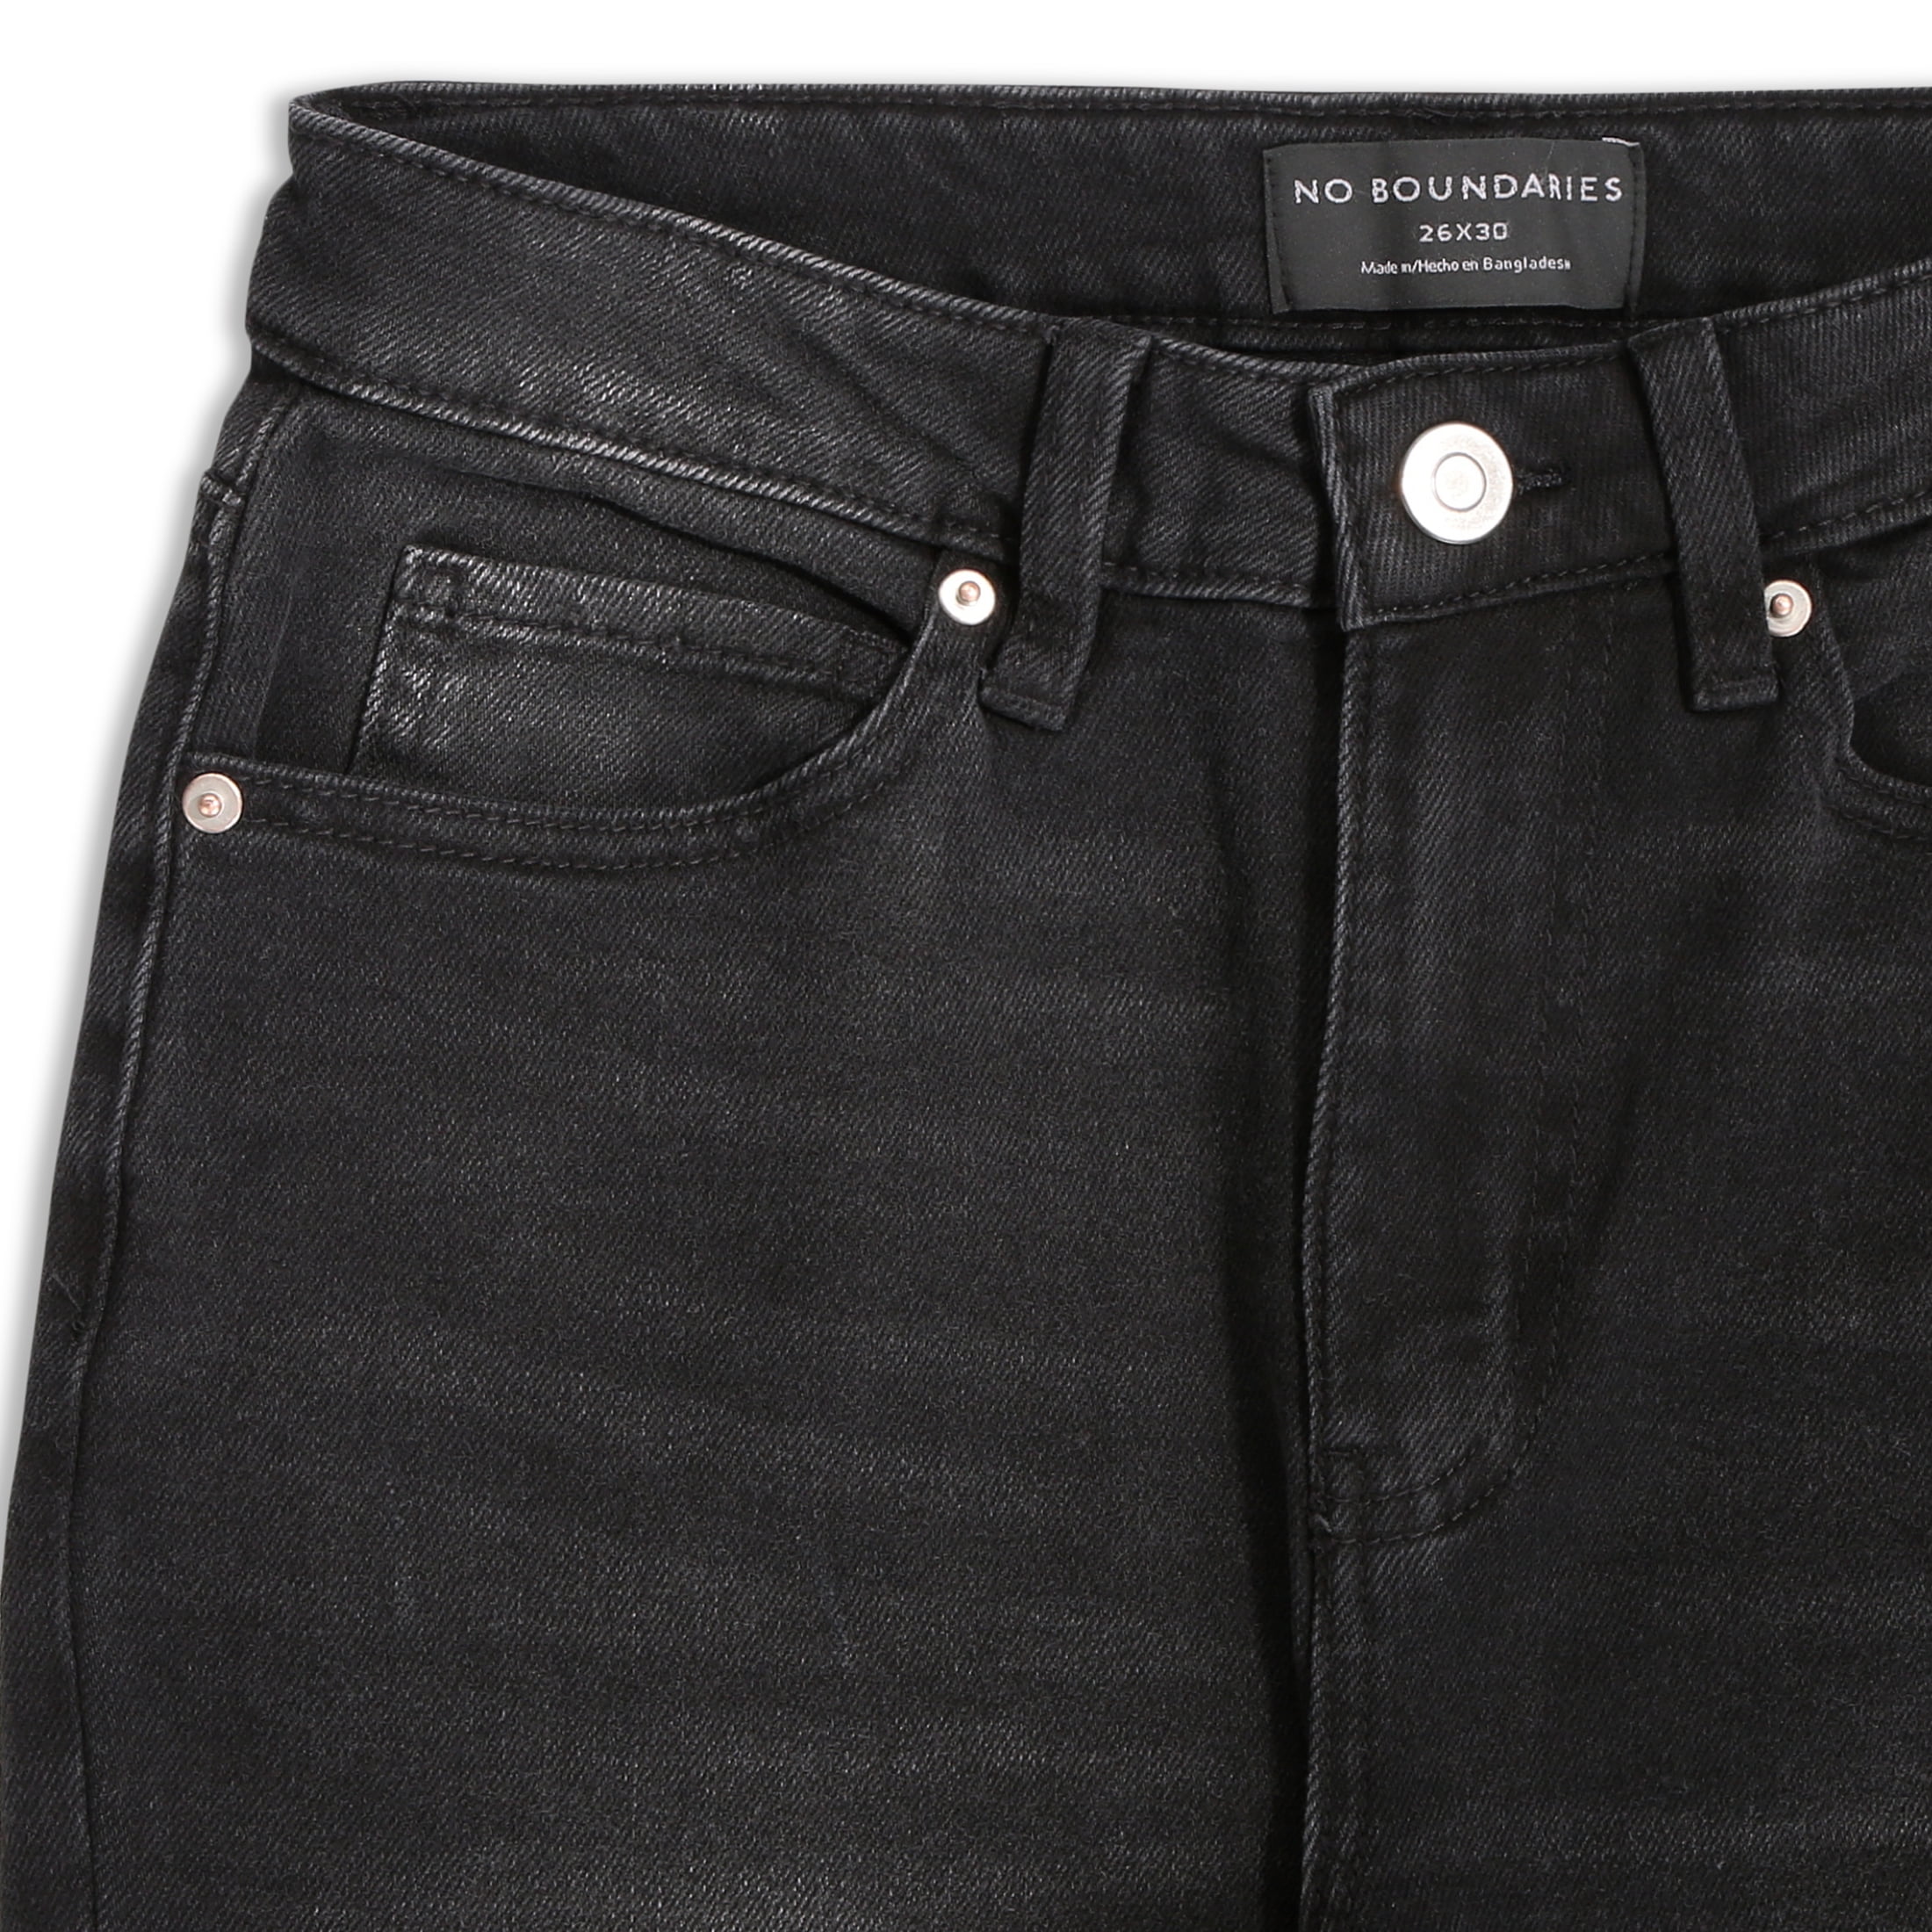 No Boundaries Slim Fit Denim Jeans, Sizes 26x30 - India